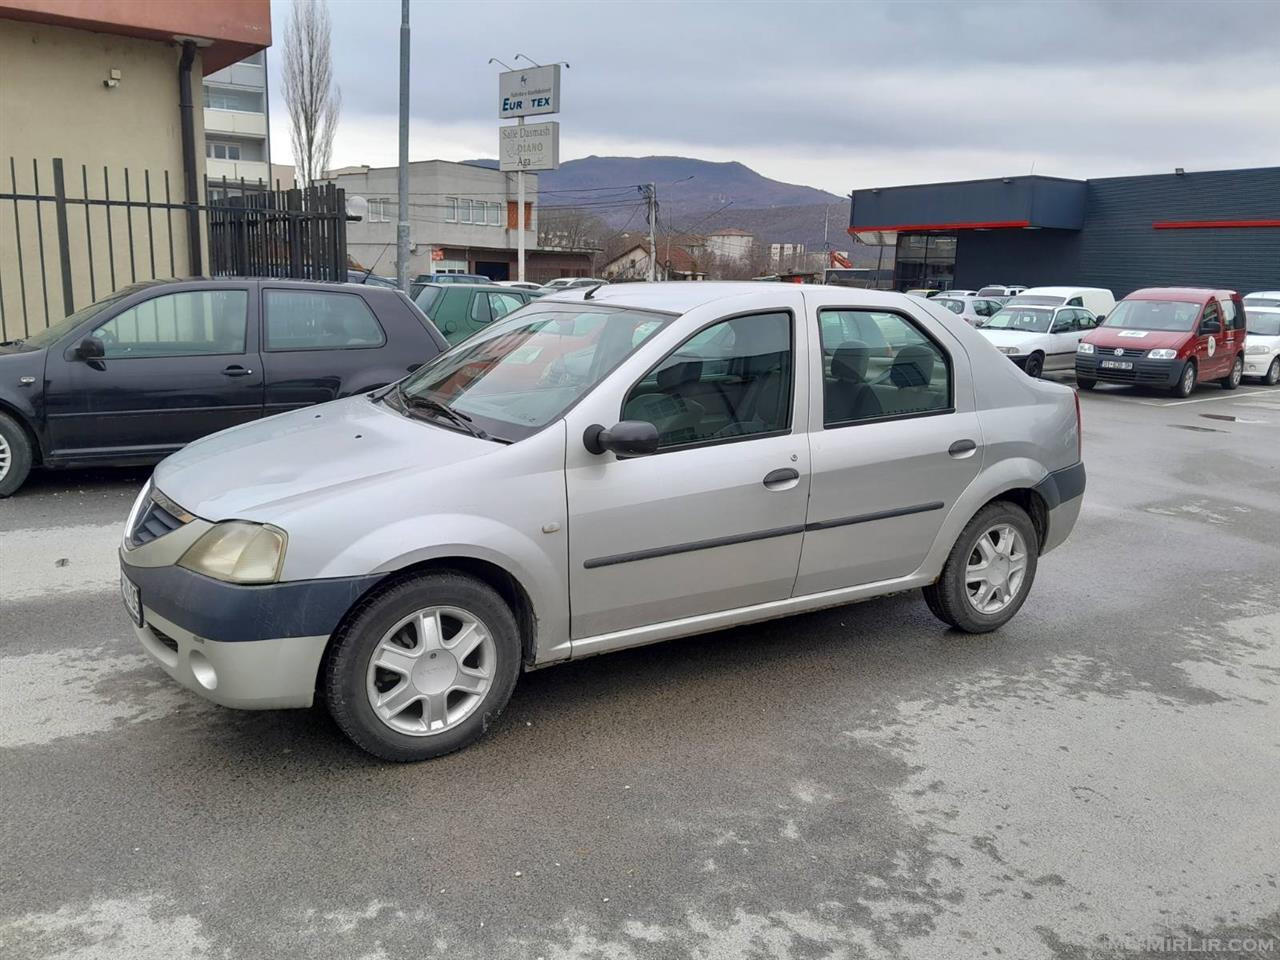 Dacia 1.4 benzin 4 muj rks 